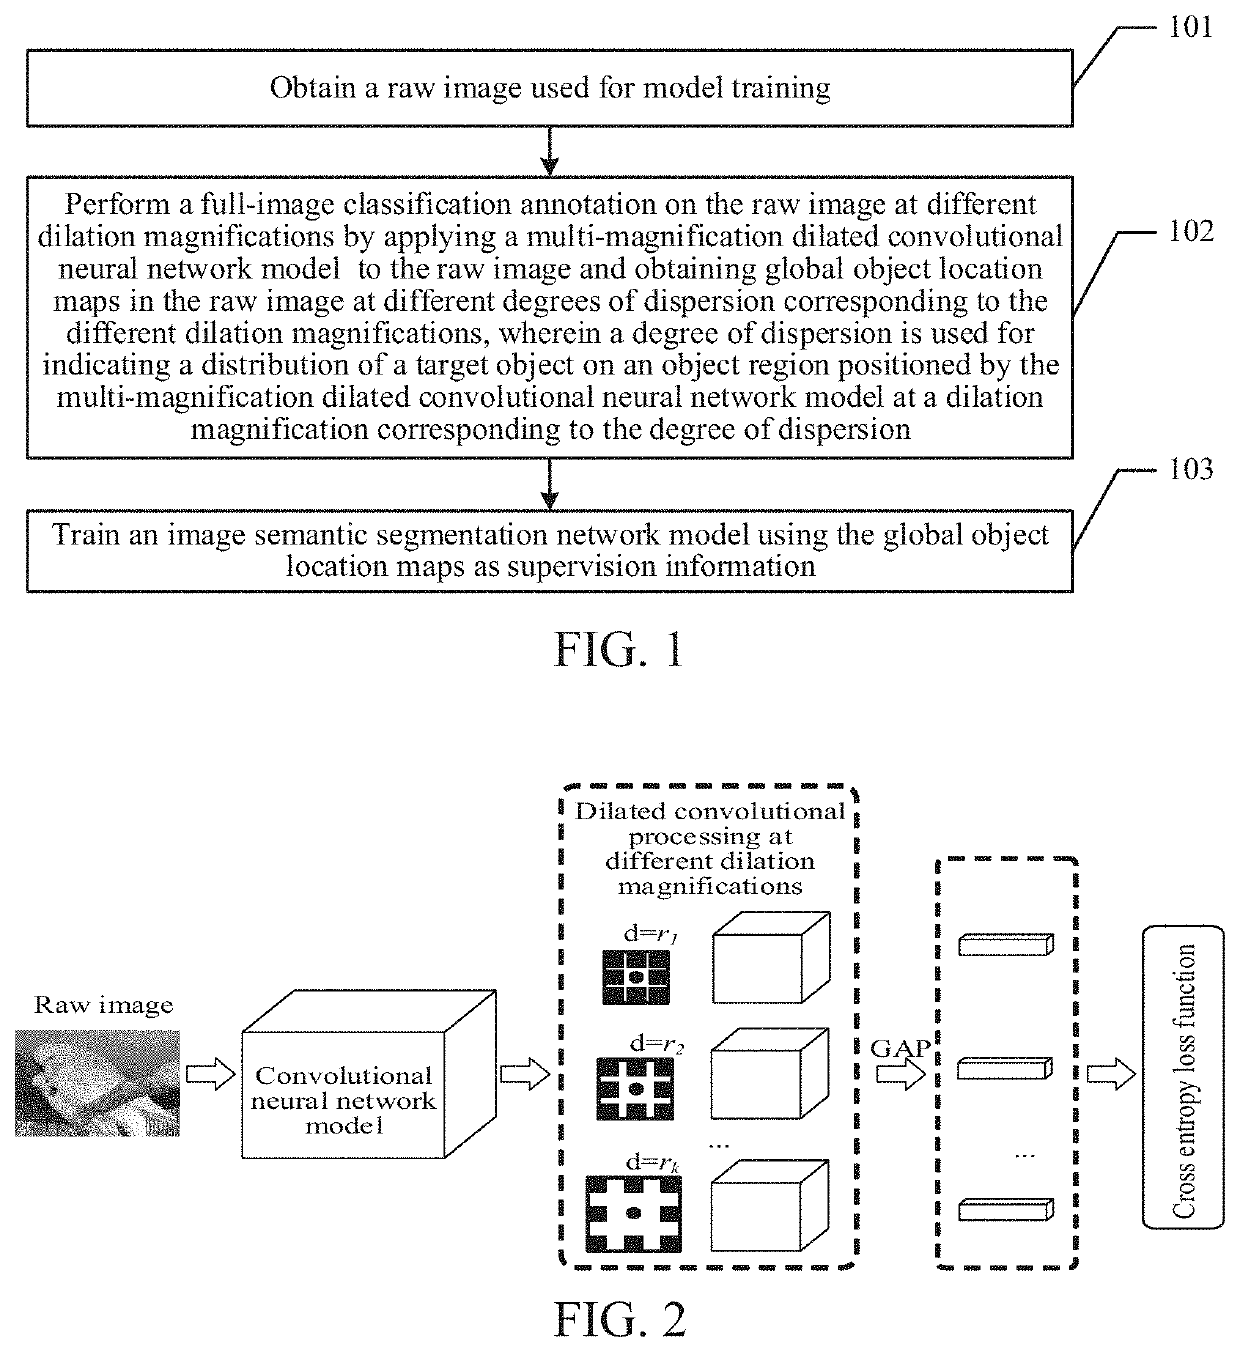 Training method for image semantic segmentation model and server